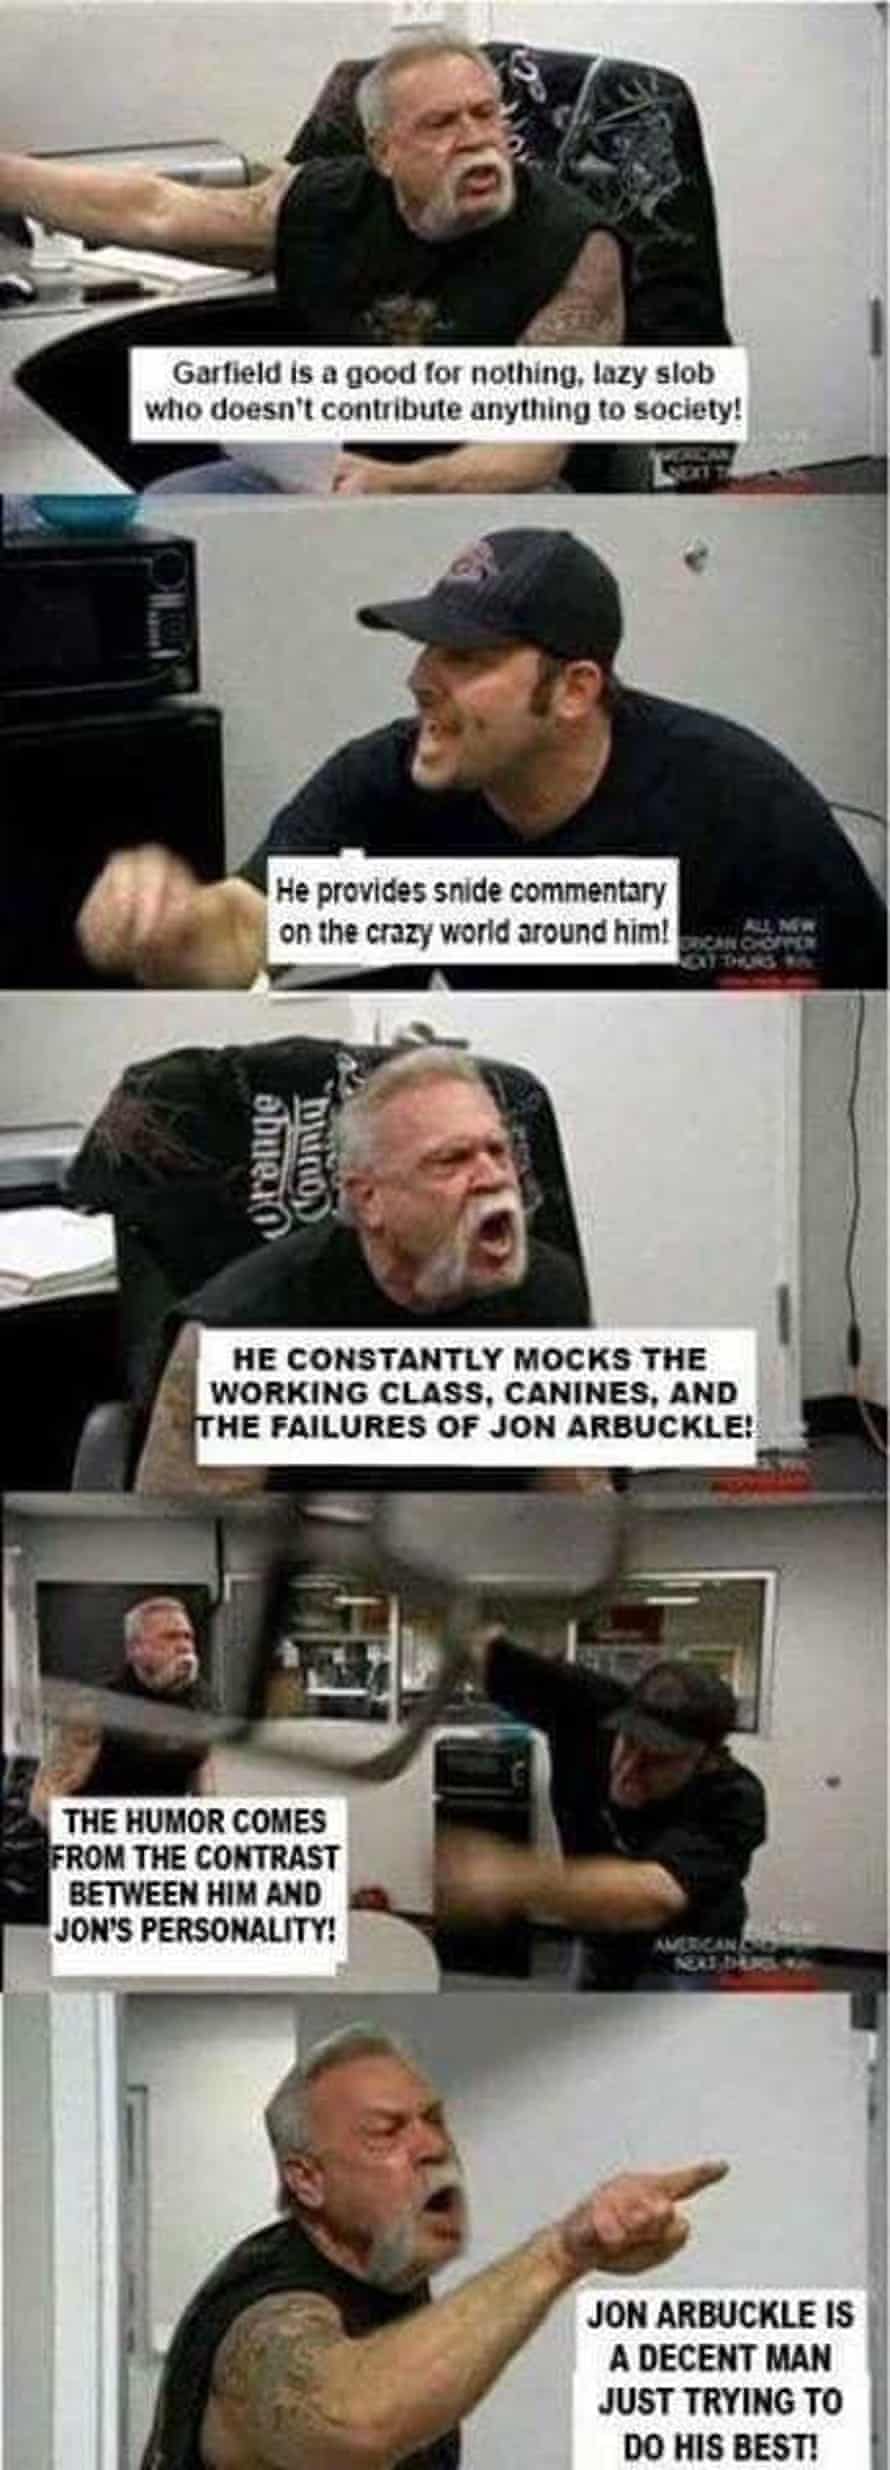 The American Chopper meme showing a debate about Garfield